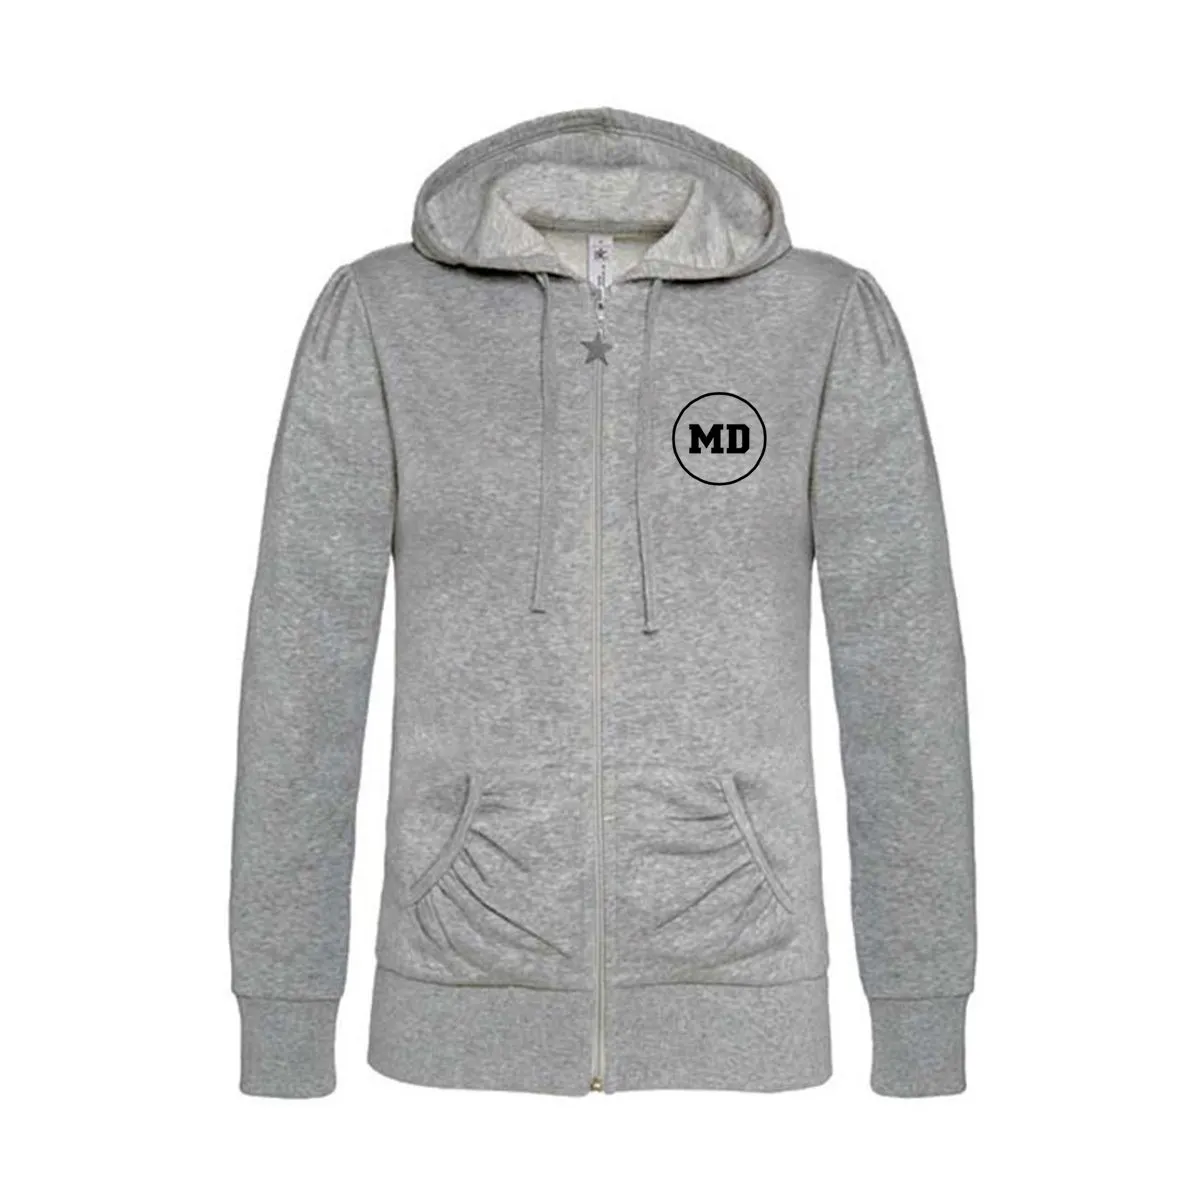 Personalisierbare Sweatshirtjacke für Frauen - Grau - M